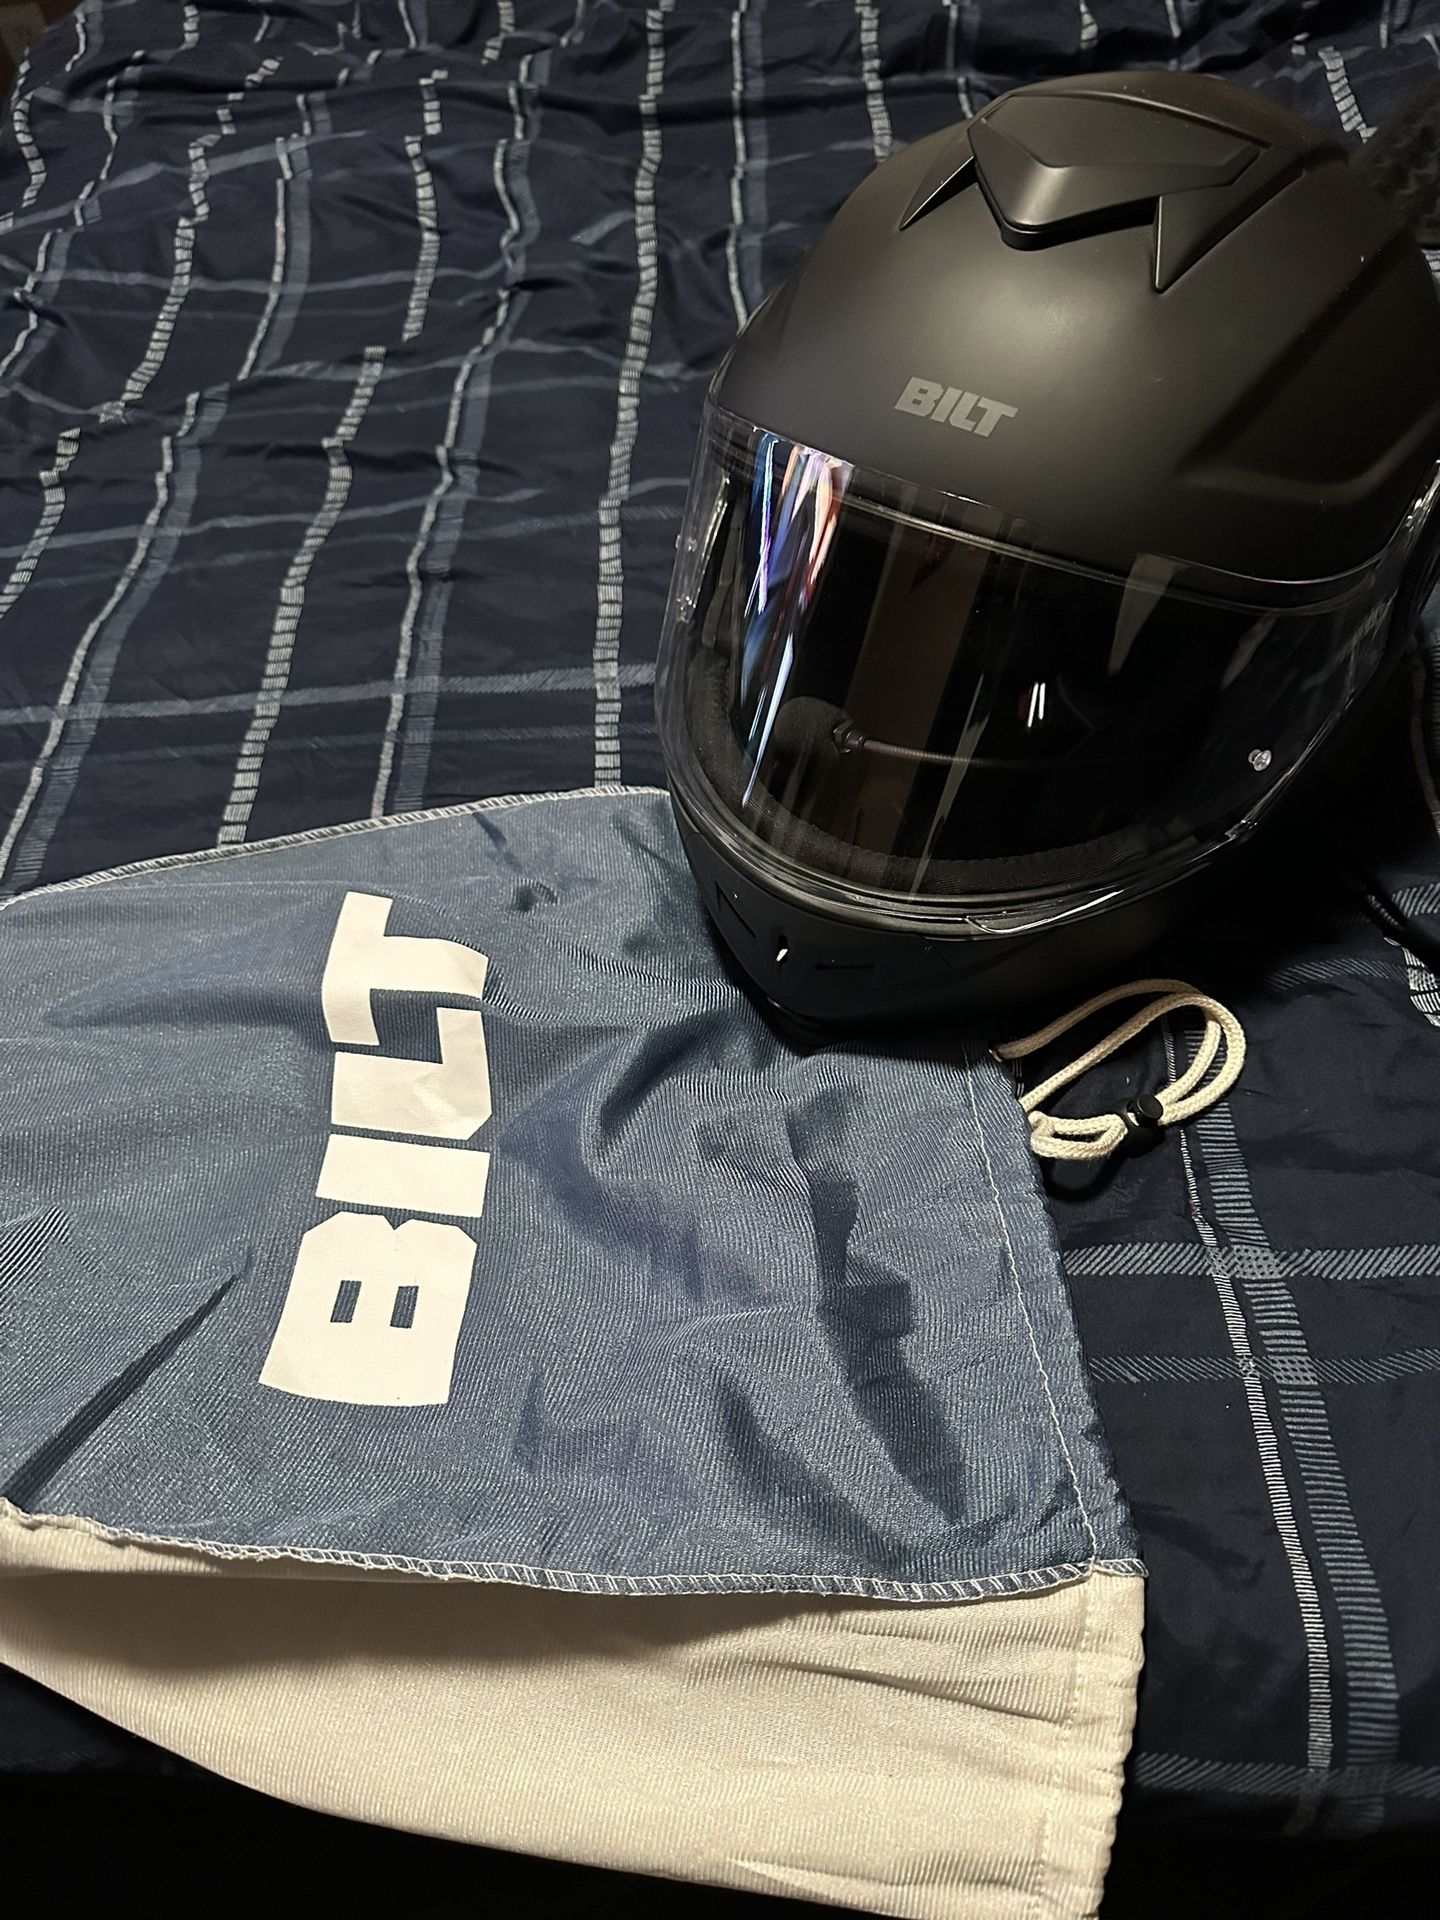 Bilt 3.0 Bluetooth Motorcycle Helmet